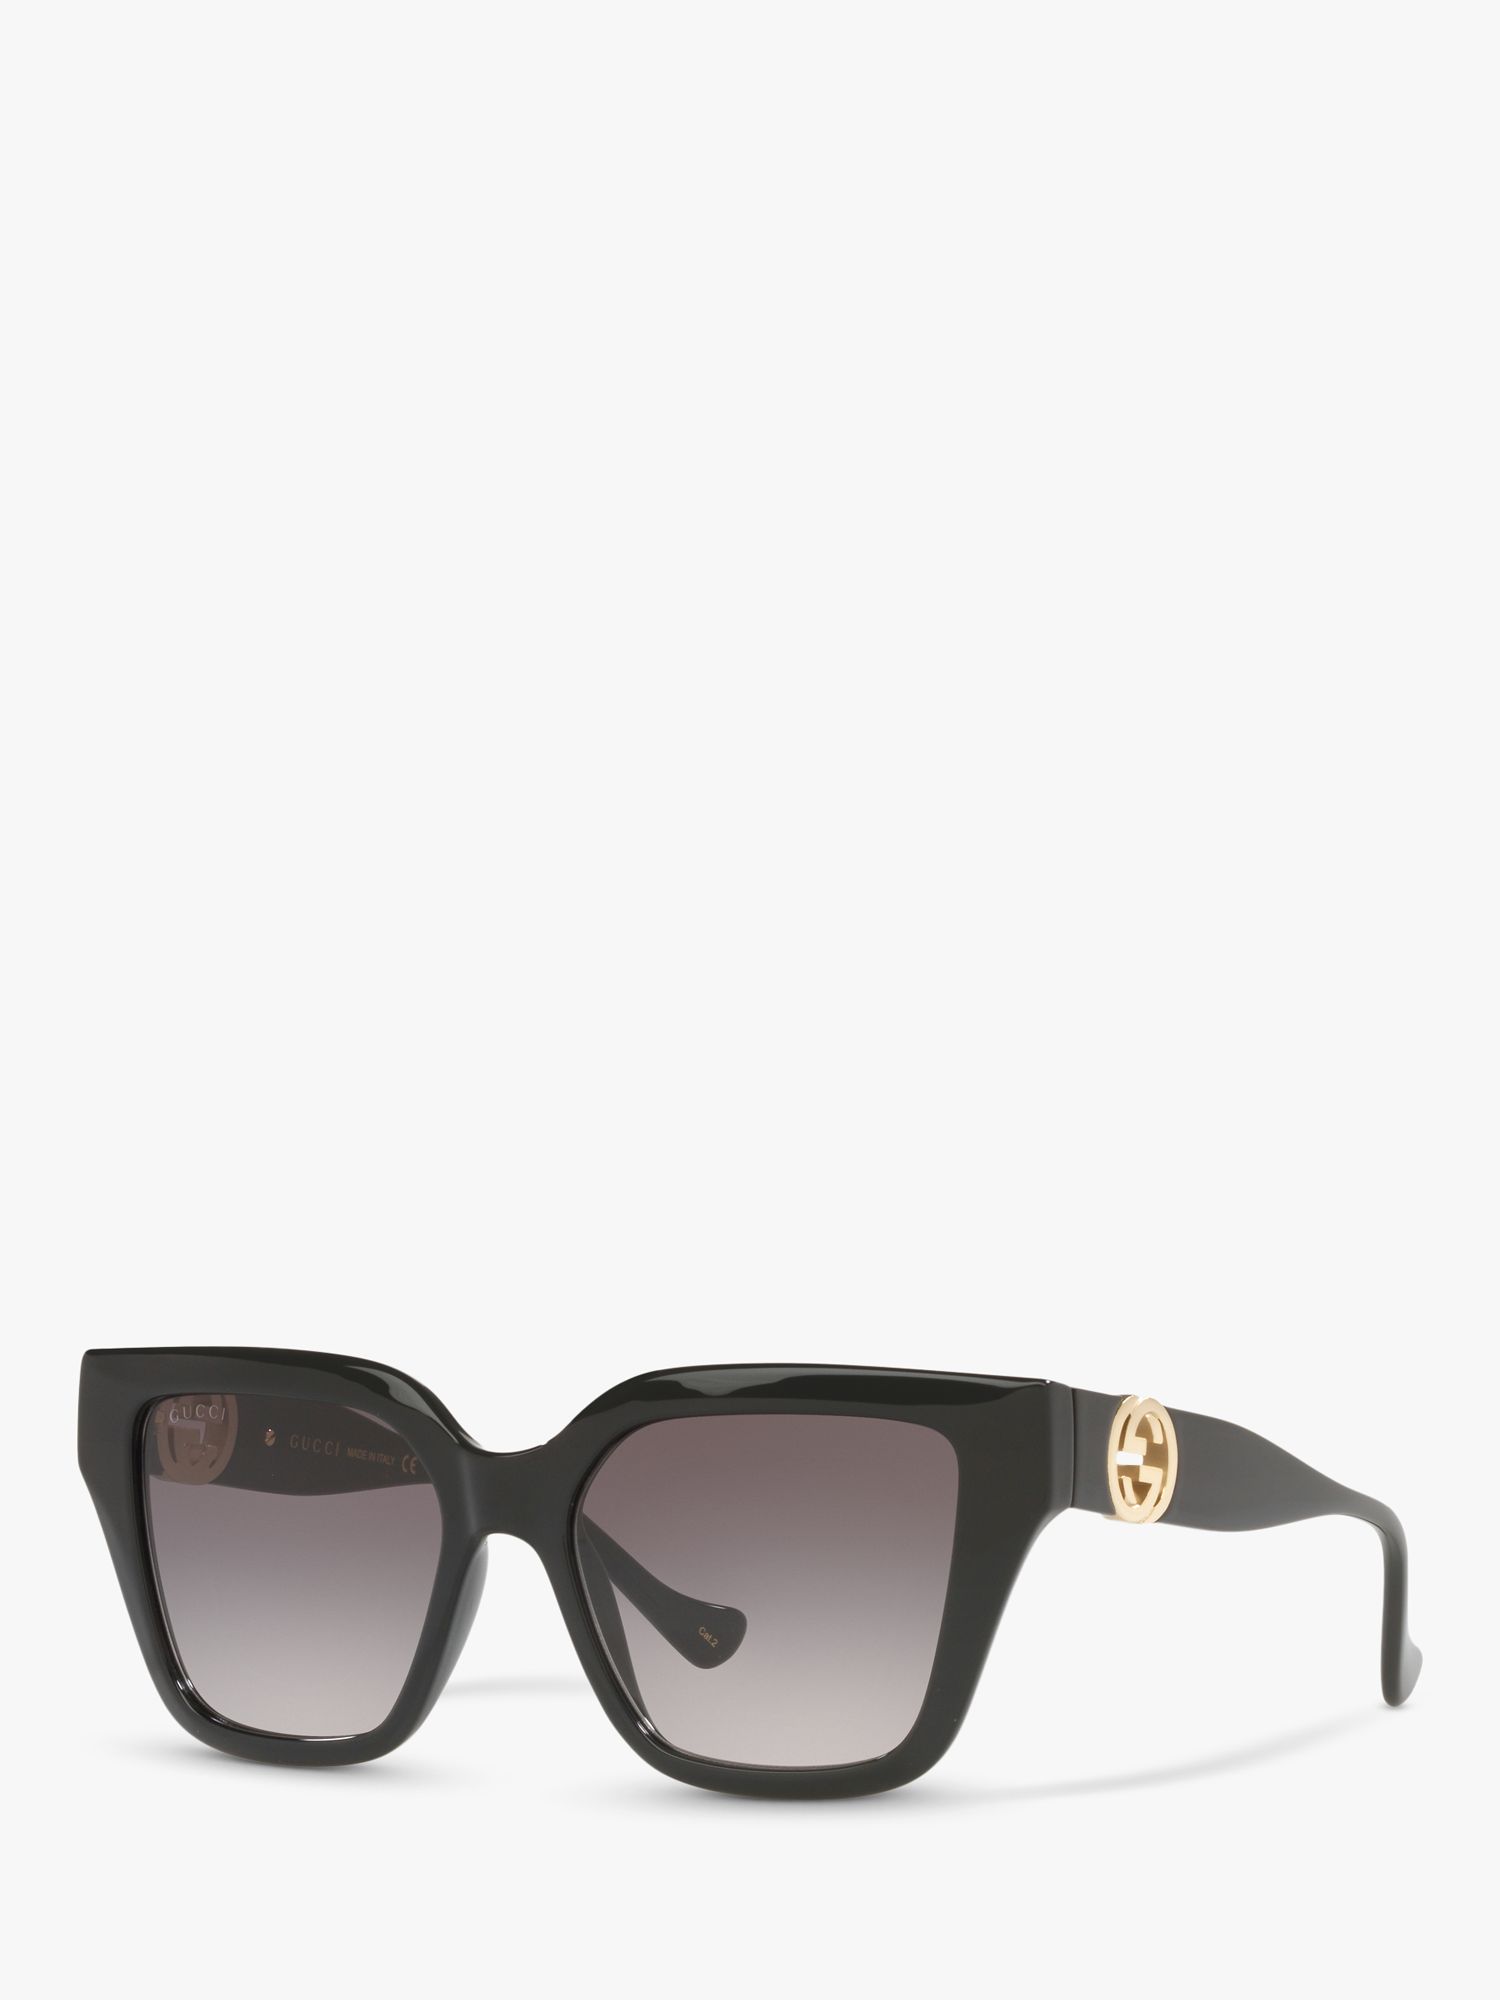 Gucci GG1023S Women's D-Frame Sunglasses, Black/Grey Gradient at John Lewis & Partners